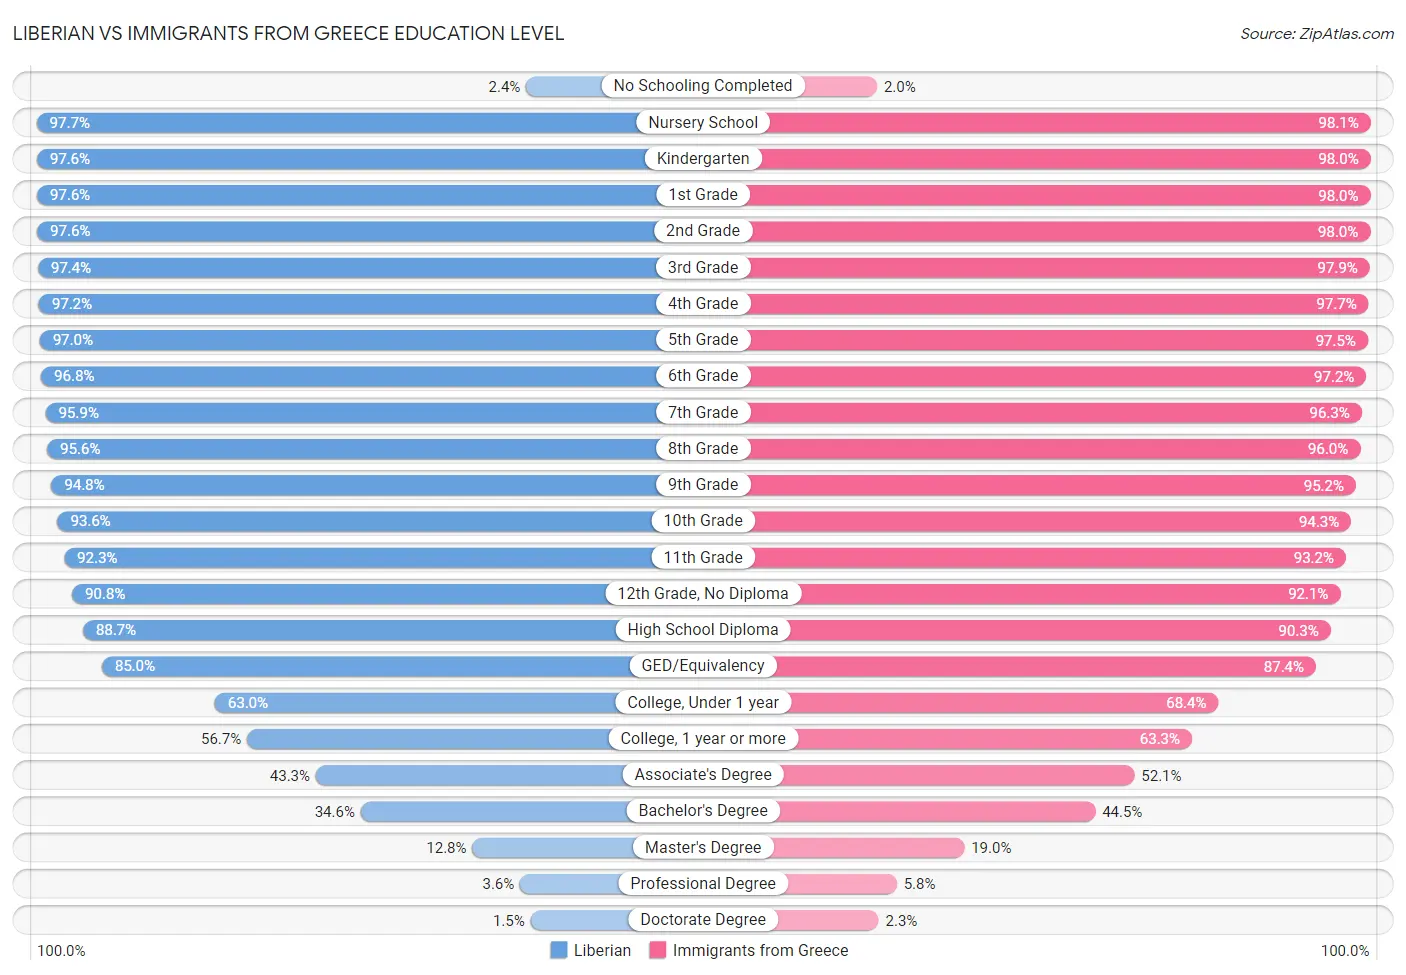 Liberian vs Immigrants from Greece Education Level